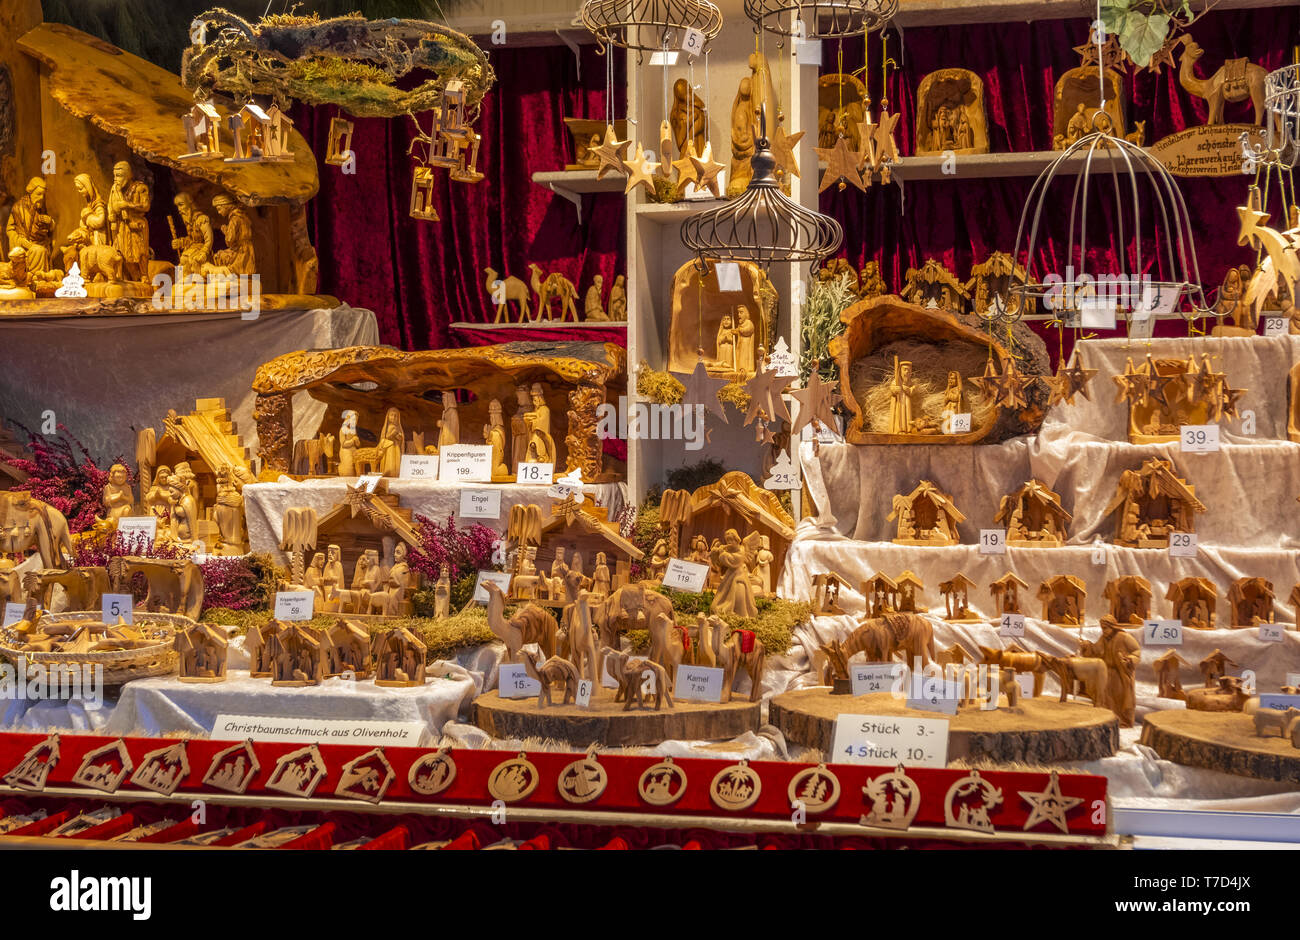 Christmas market in Heidelberg, Germany Stock Photo